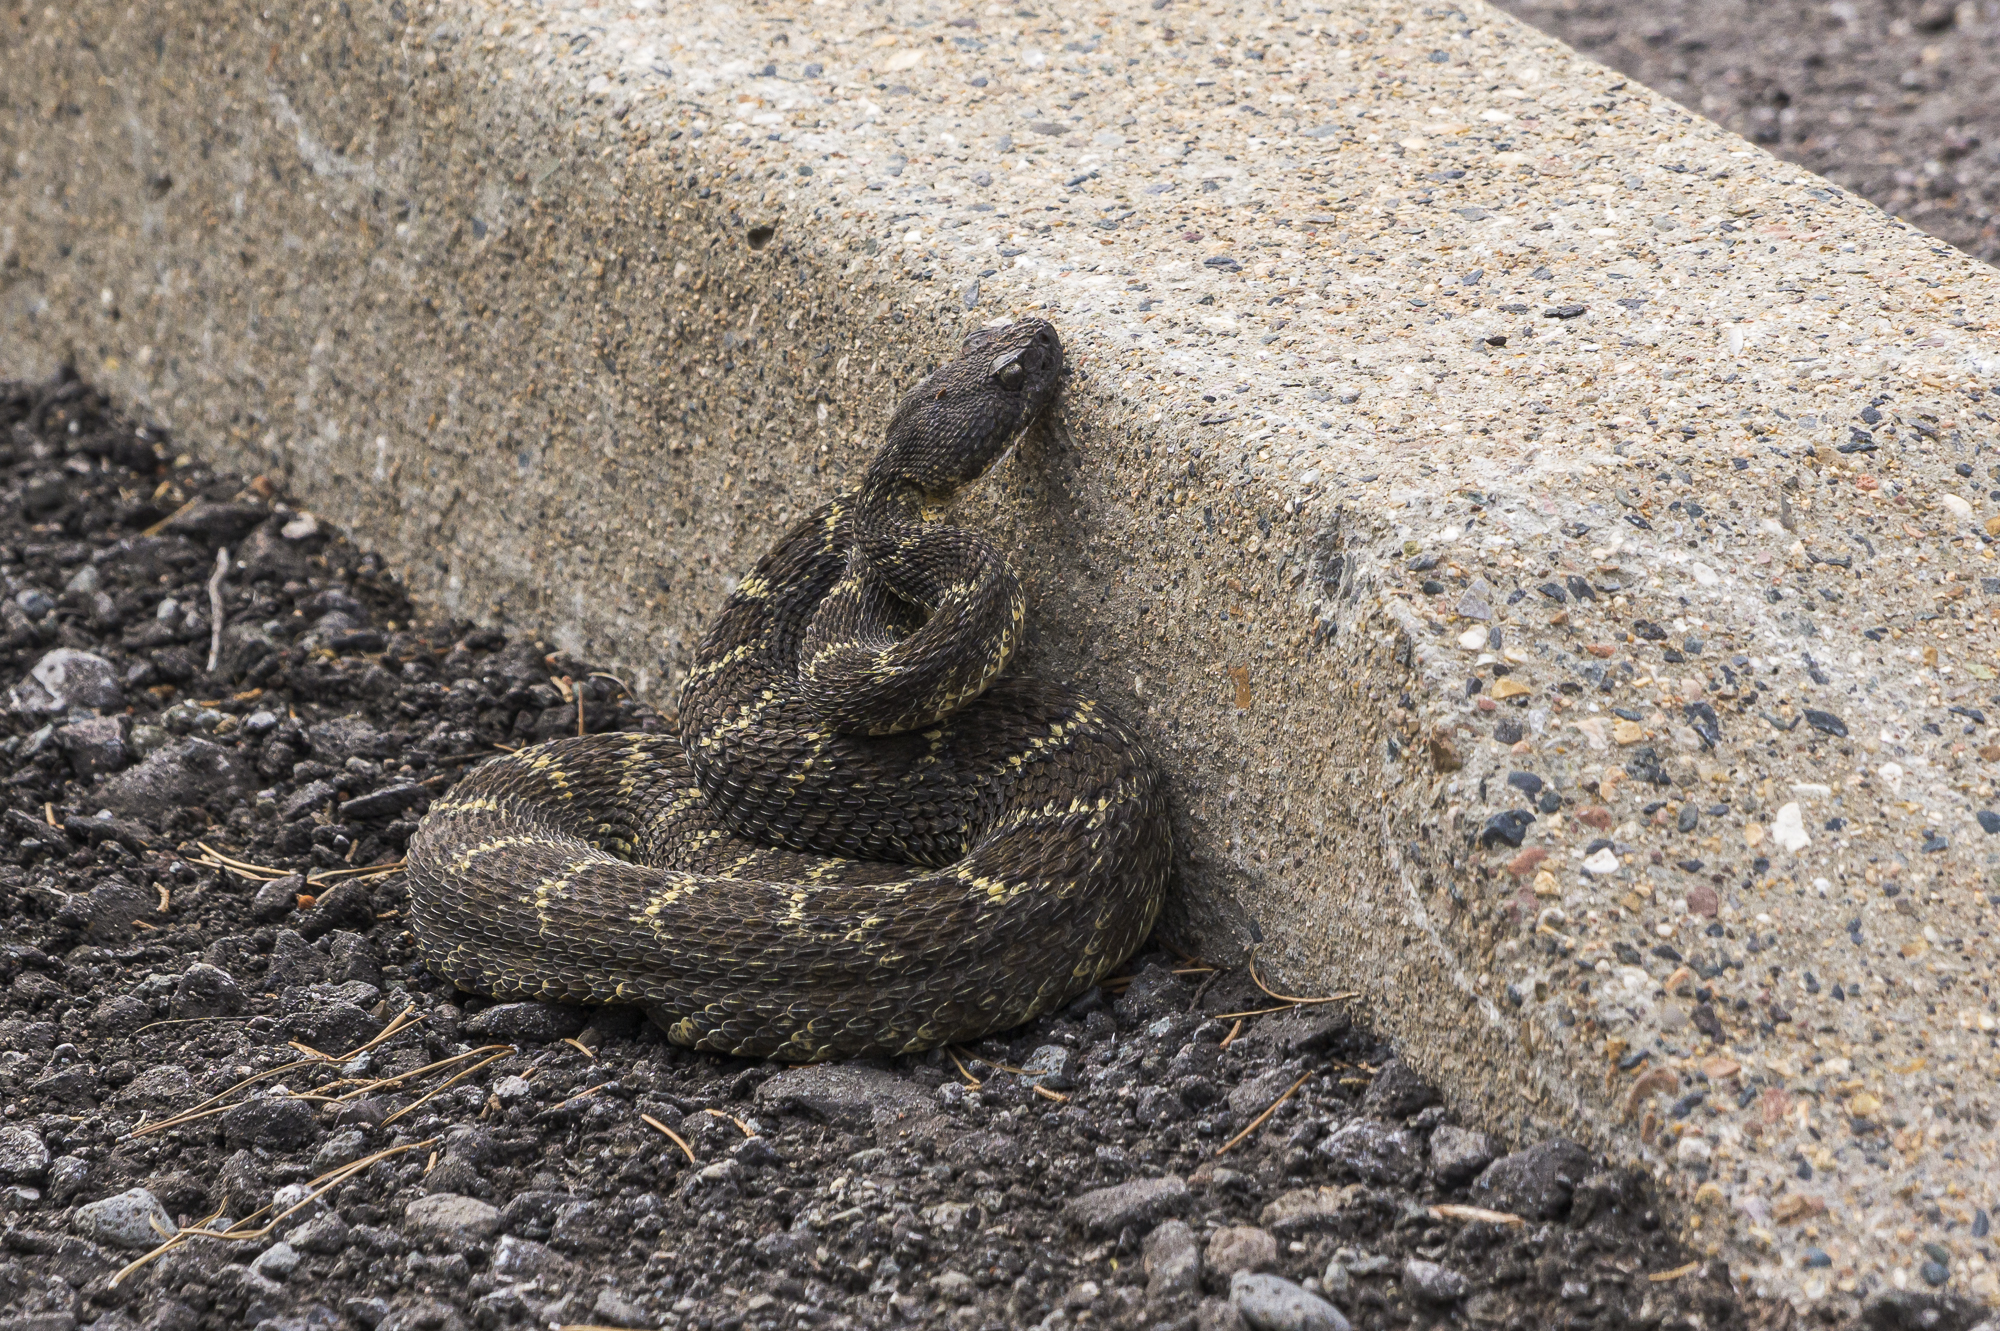 Placid Arizona Black Rattlesnake